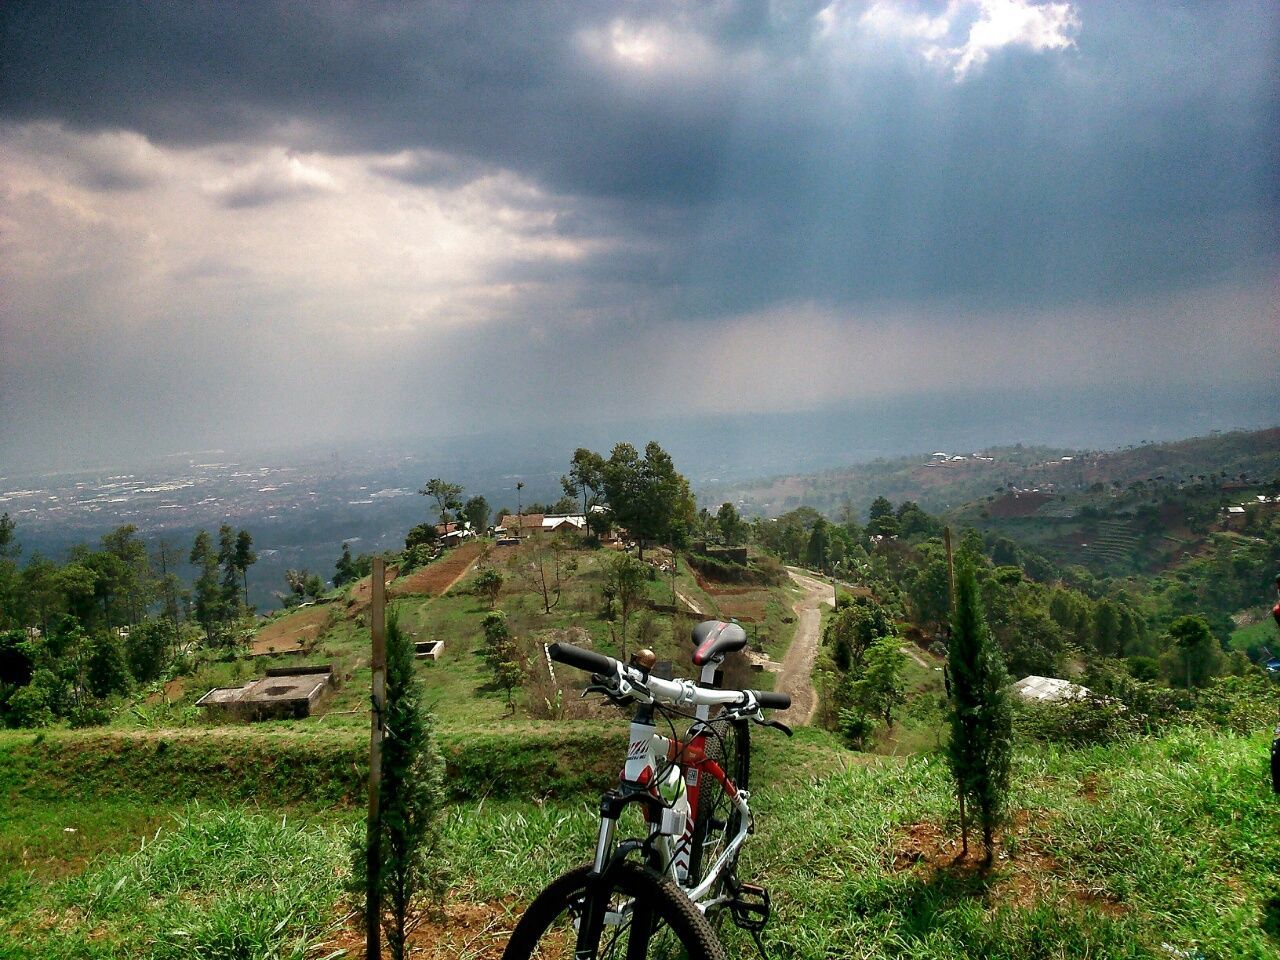 Mountain bike on landscape against cloudy sky